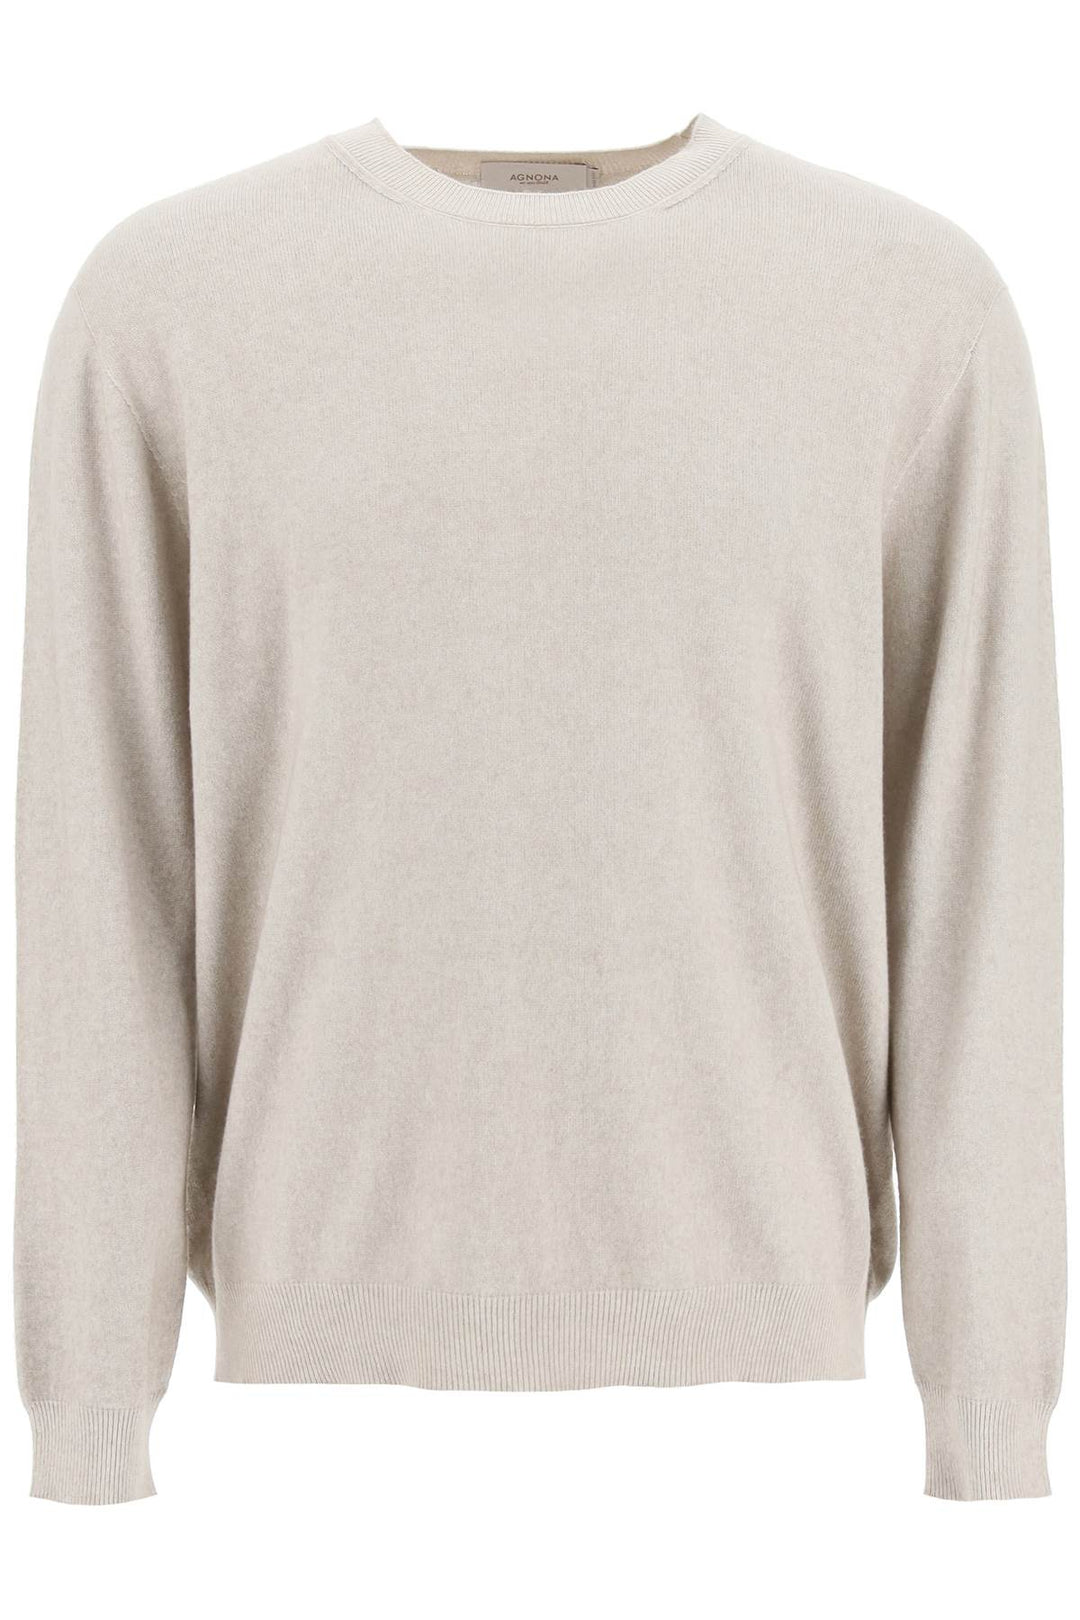 Agnona cotton and cashmere sweater-0